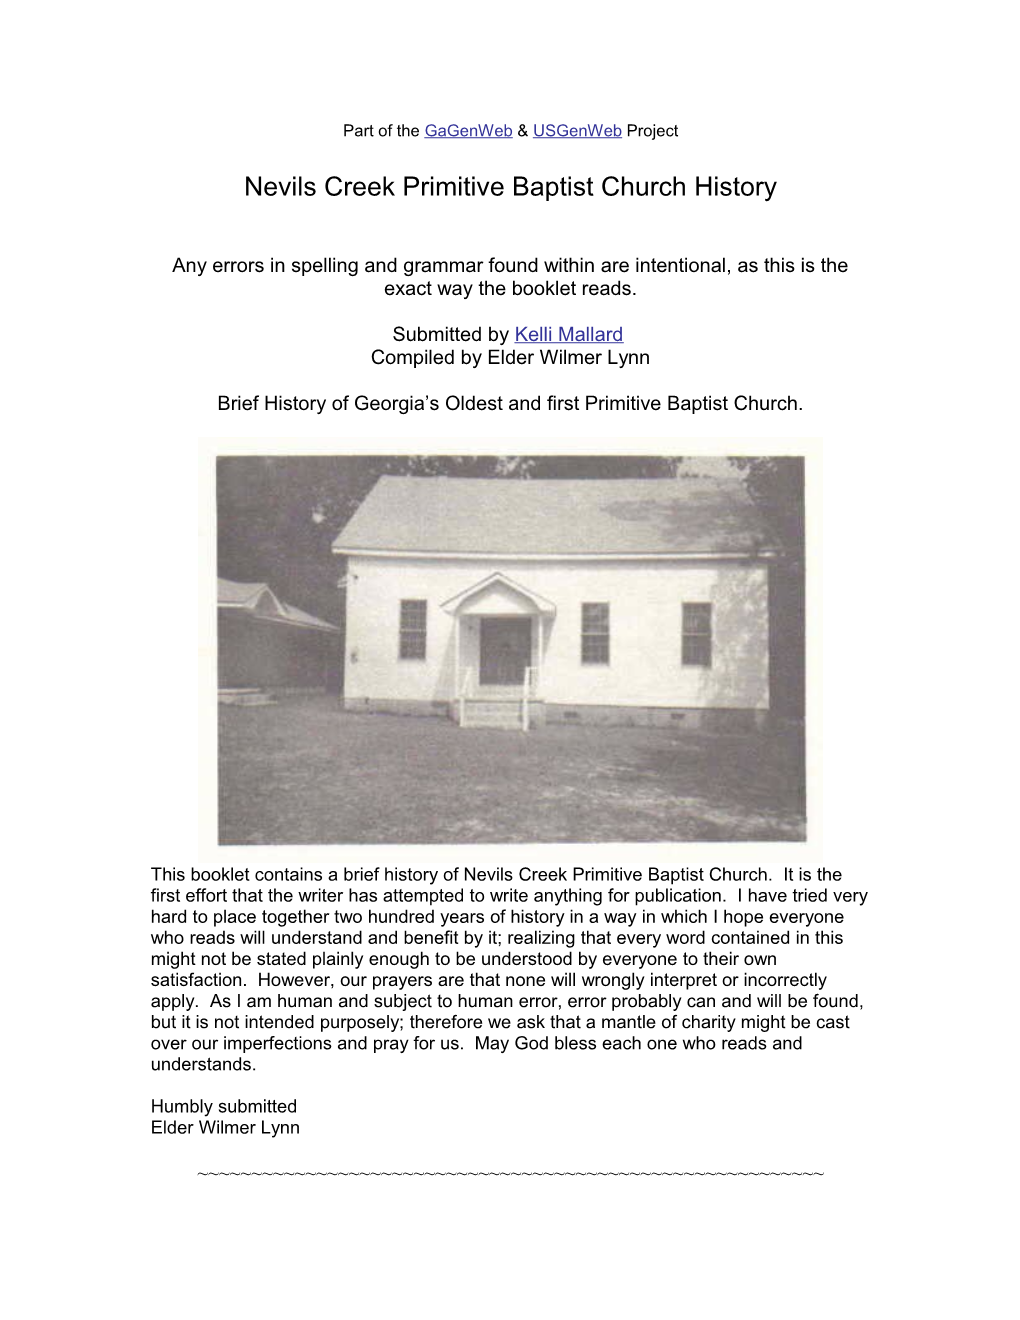 Nevils Creek Primitive Baptist Church History